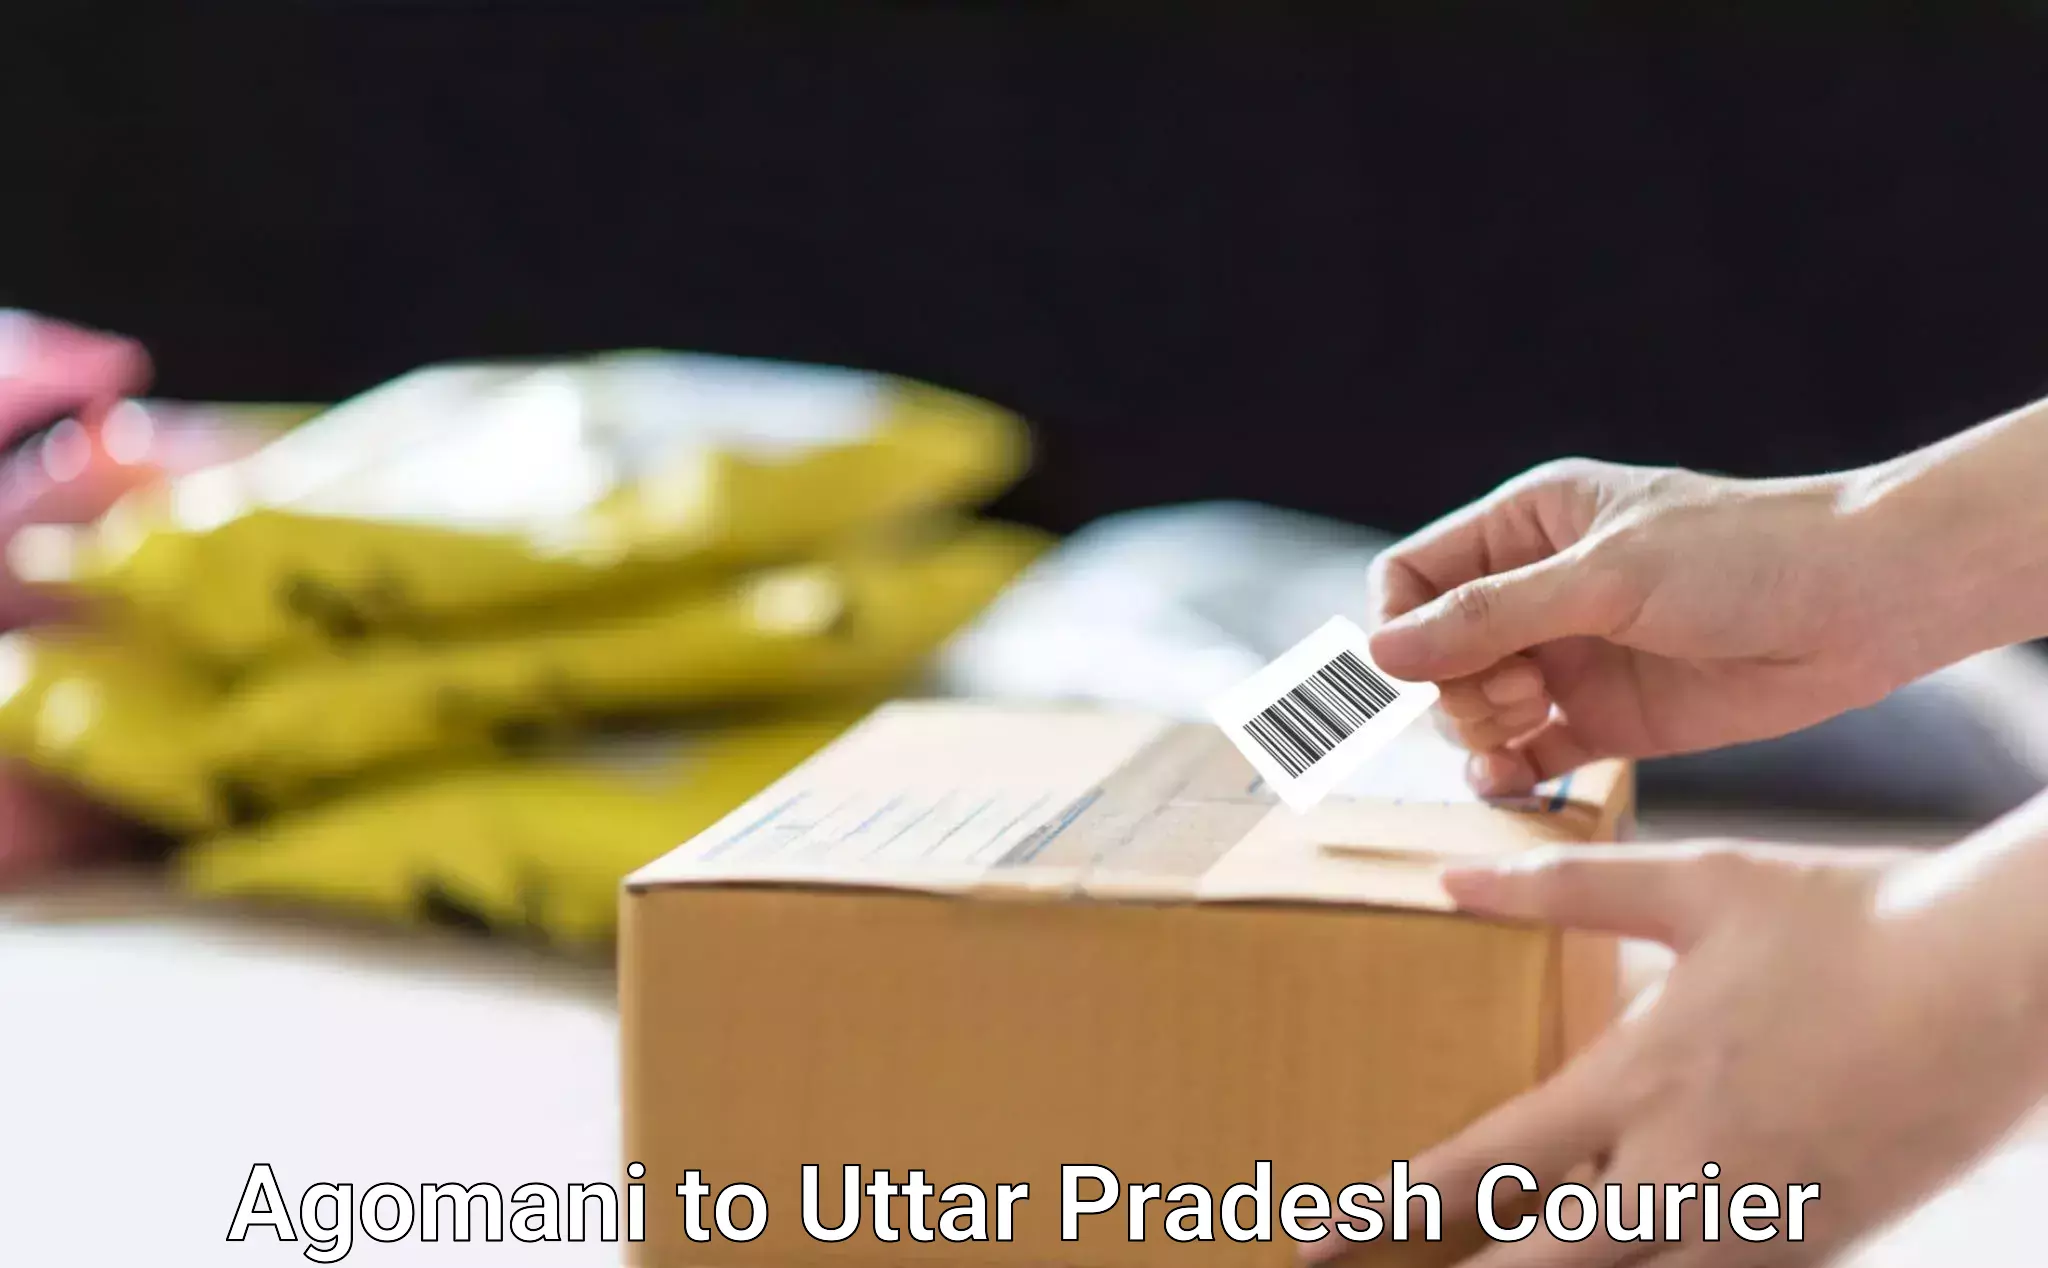 Express mail service Agomani to Uttar Pradesh